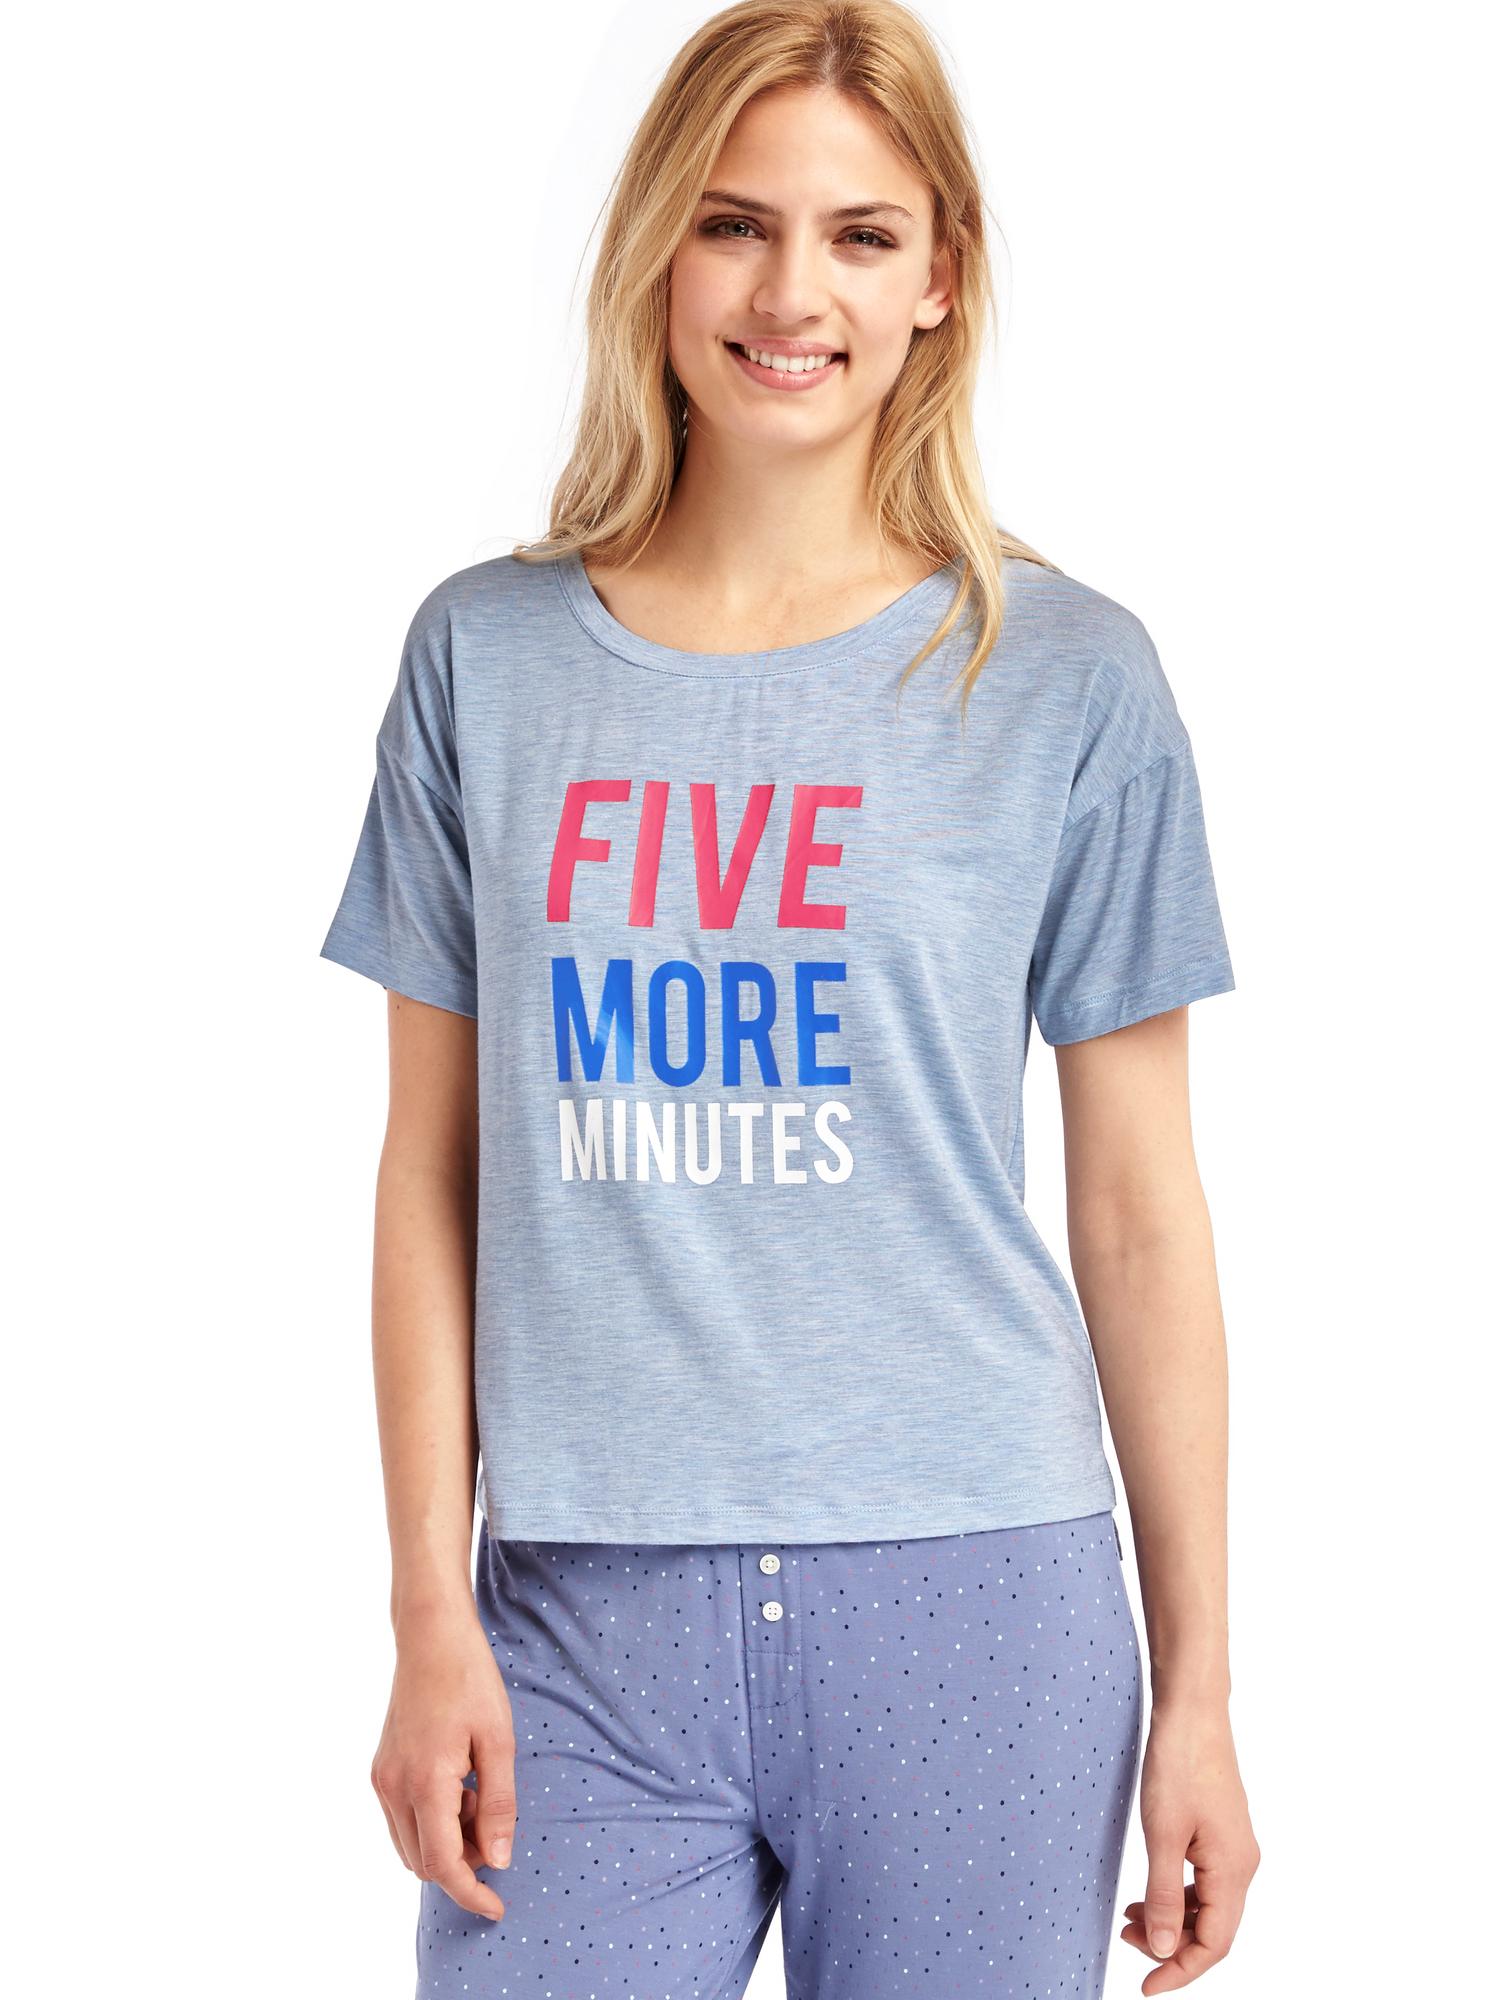 Women Need More Sleep T-shirt -  Canada